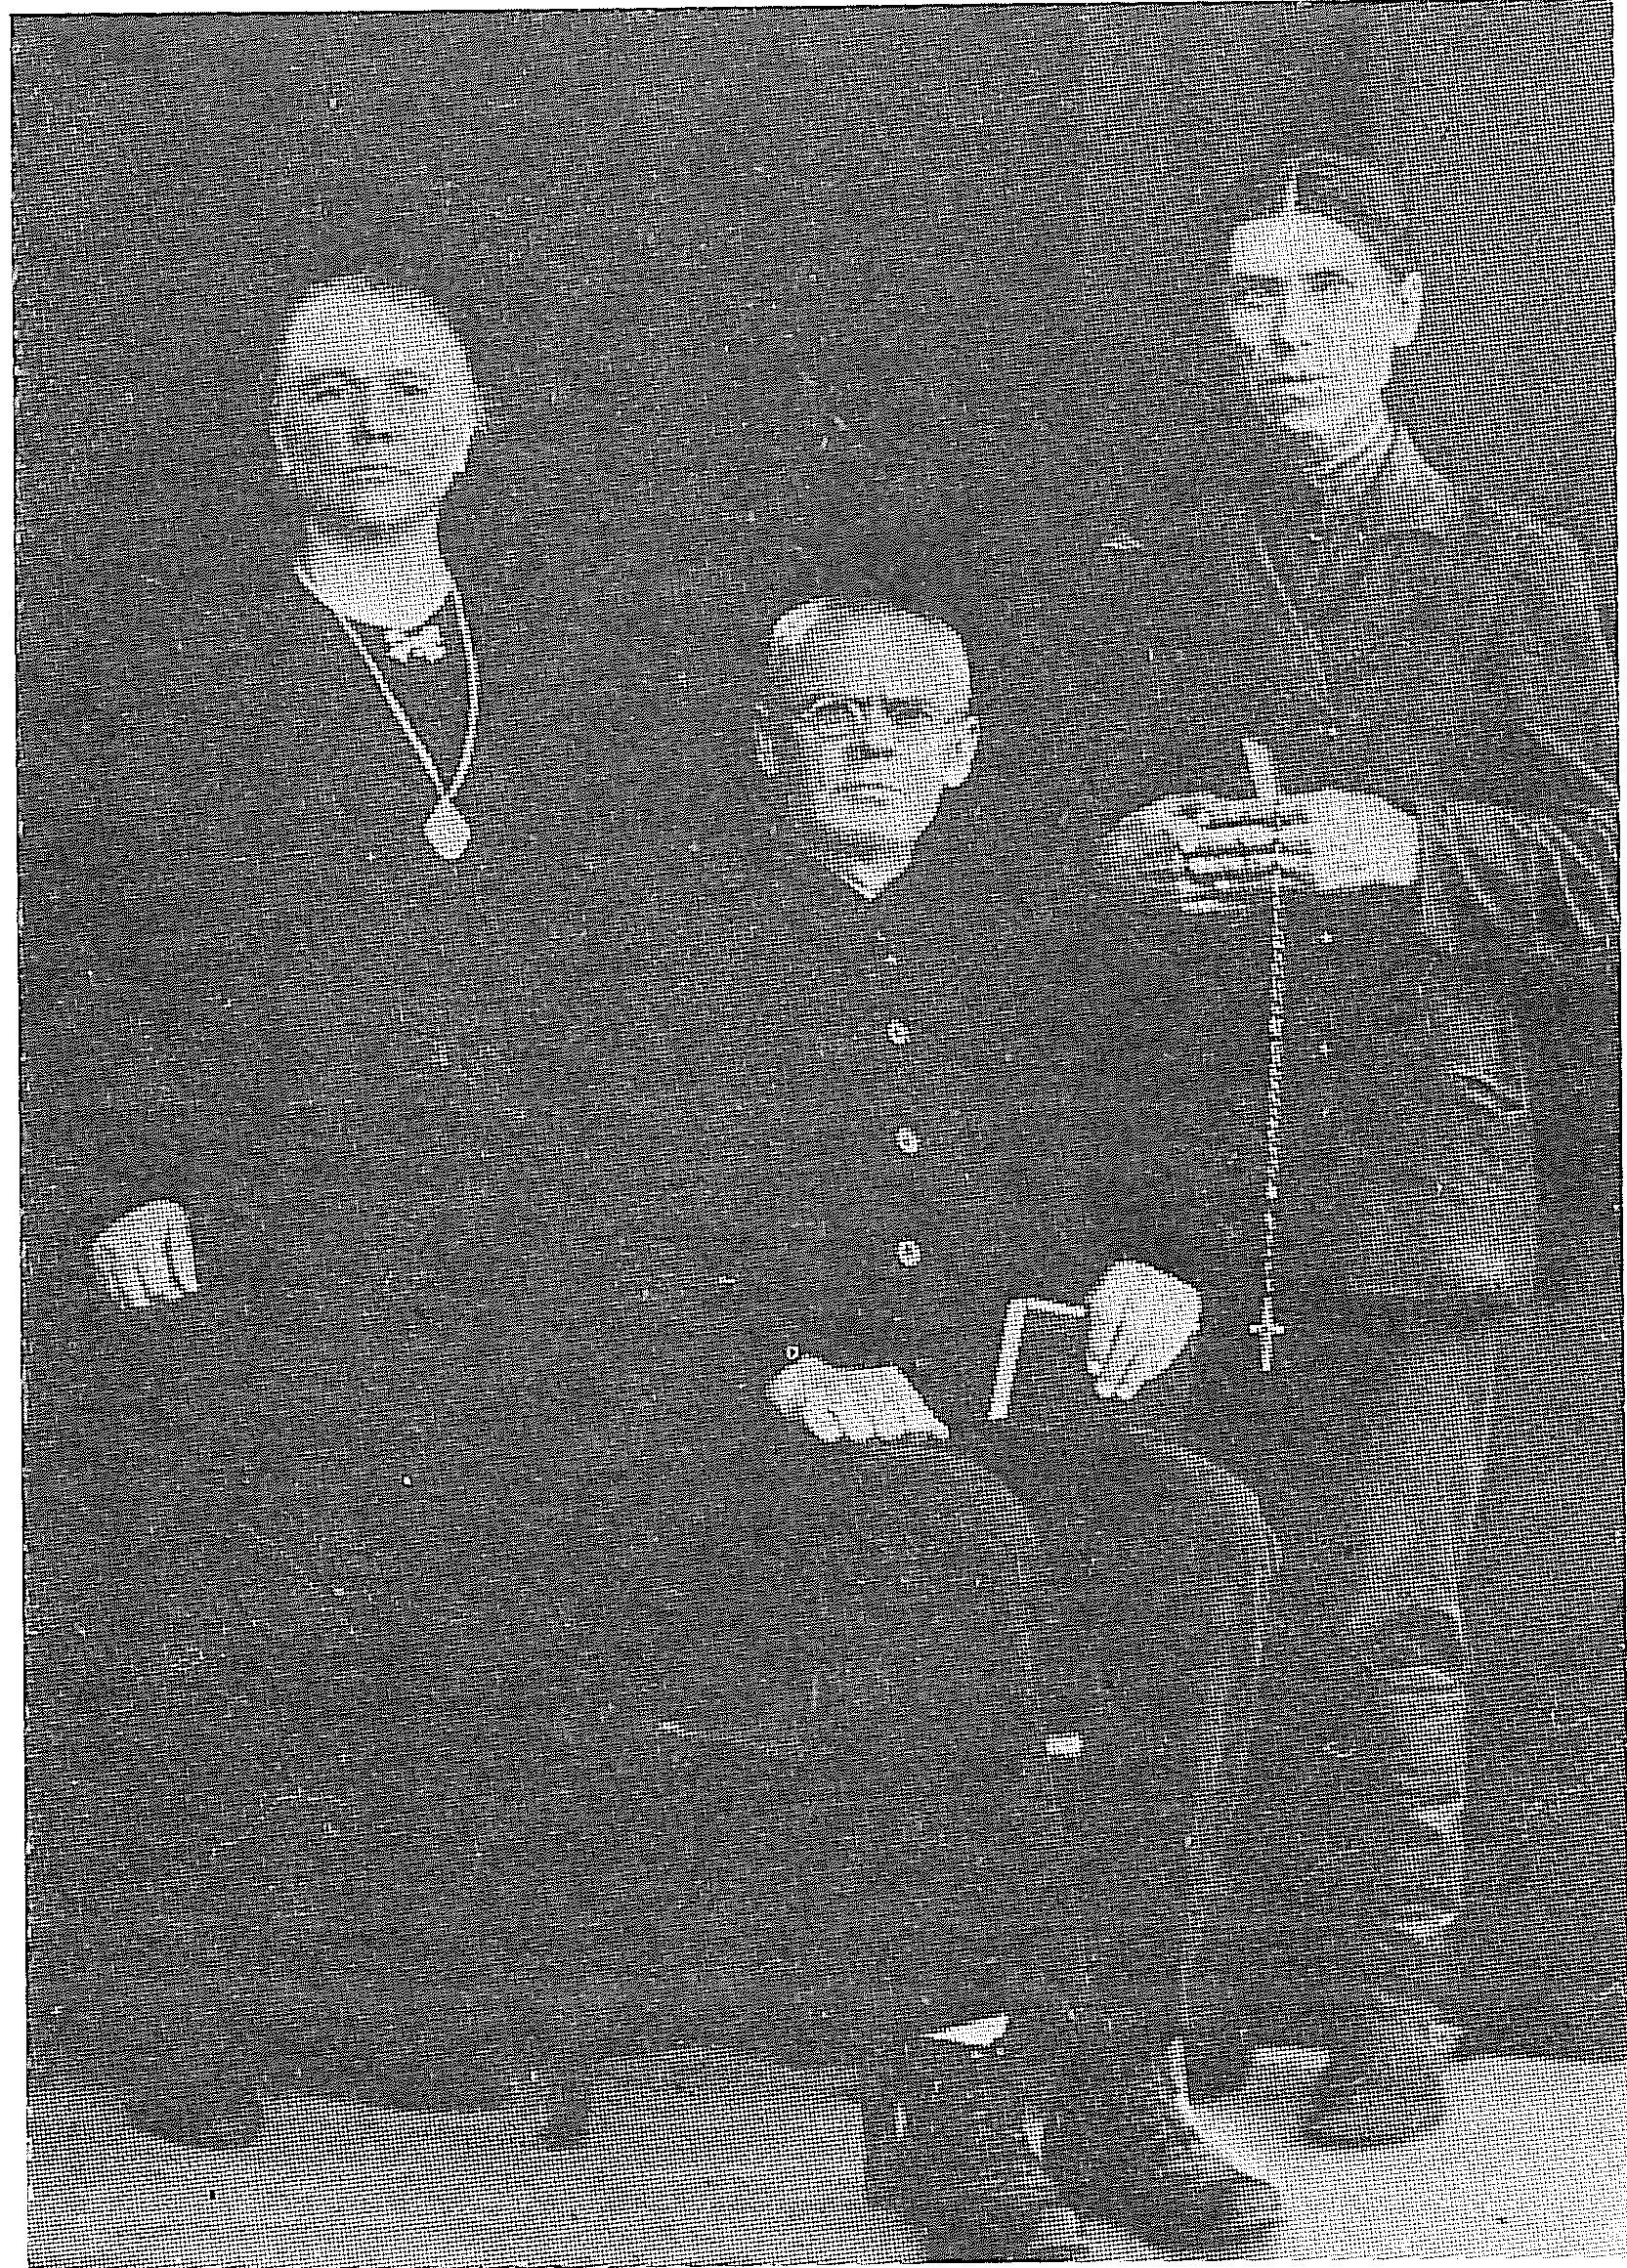 Father Schönberger (seated).  Source: Schnurr, p. 118.